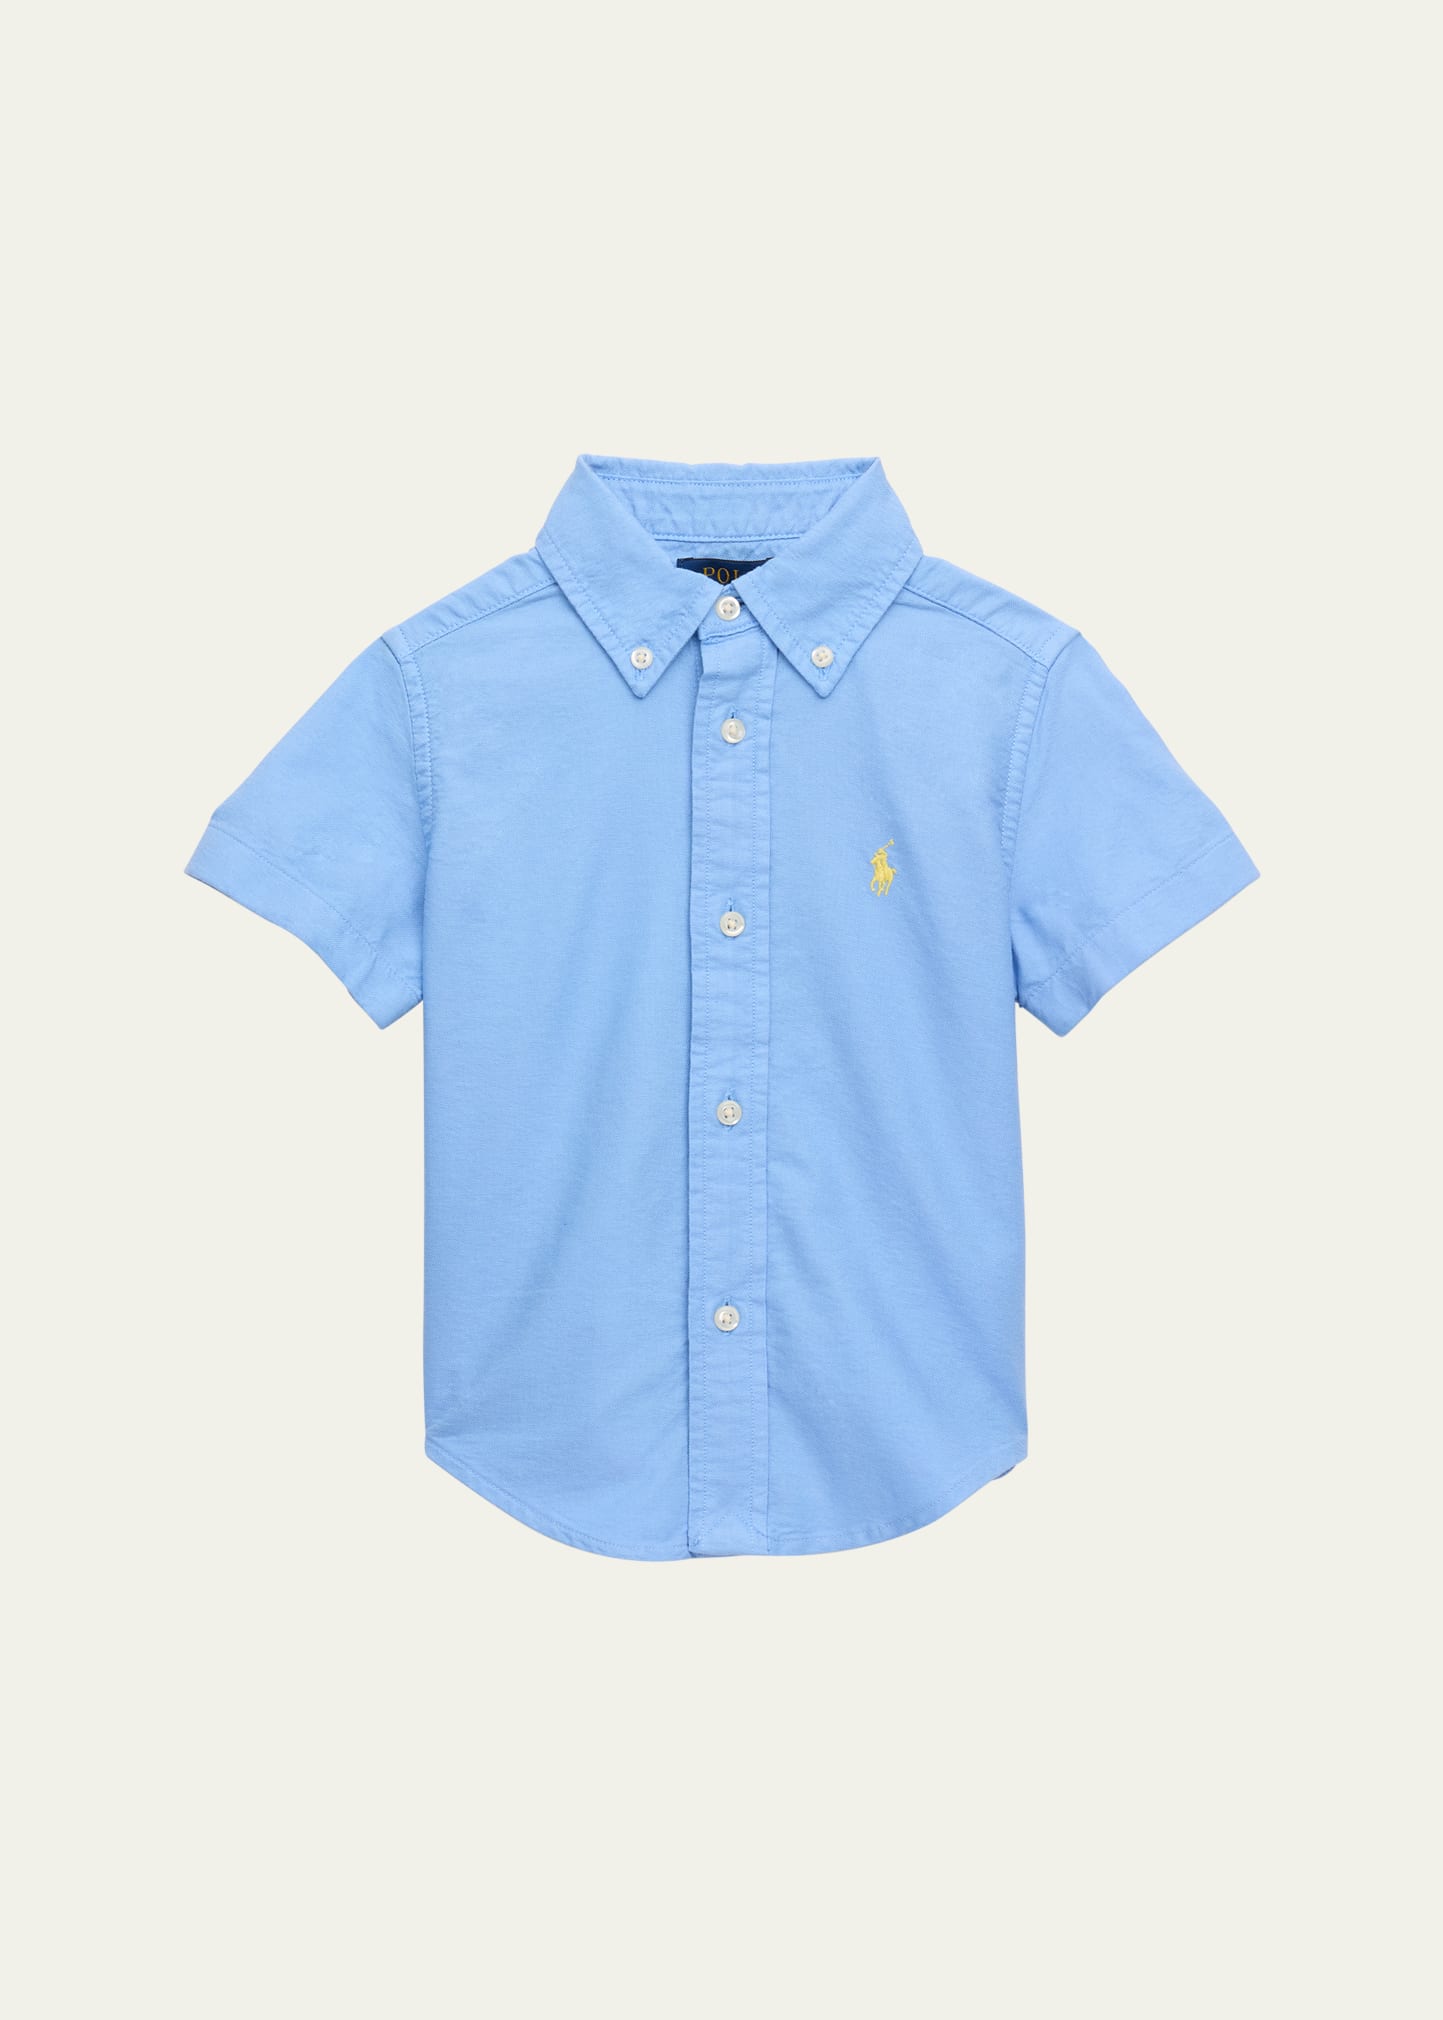 Boy's Classic Oxford Shirt, Size 2-7